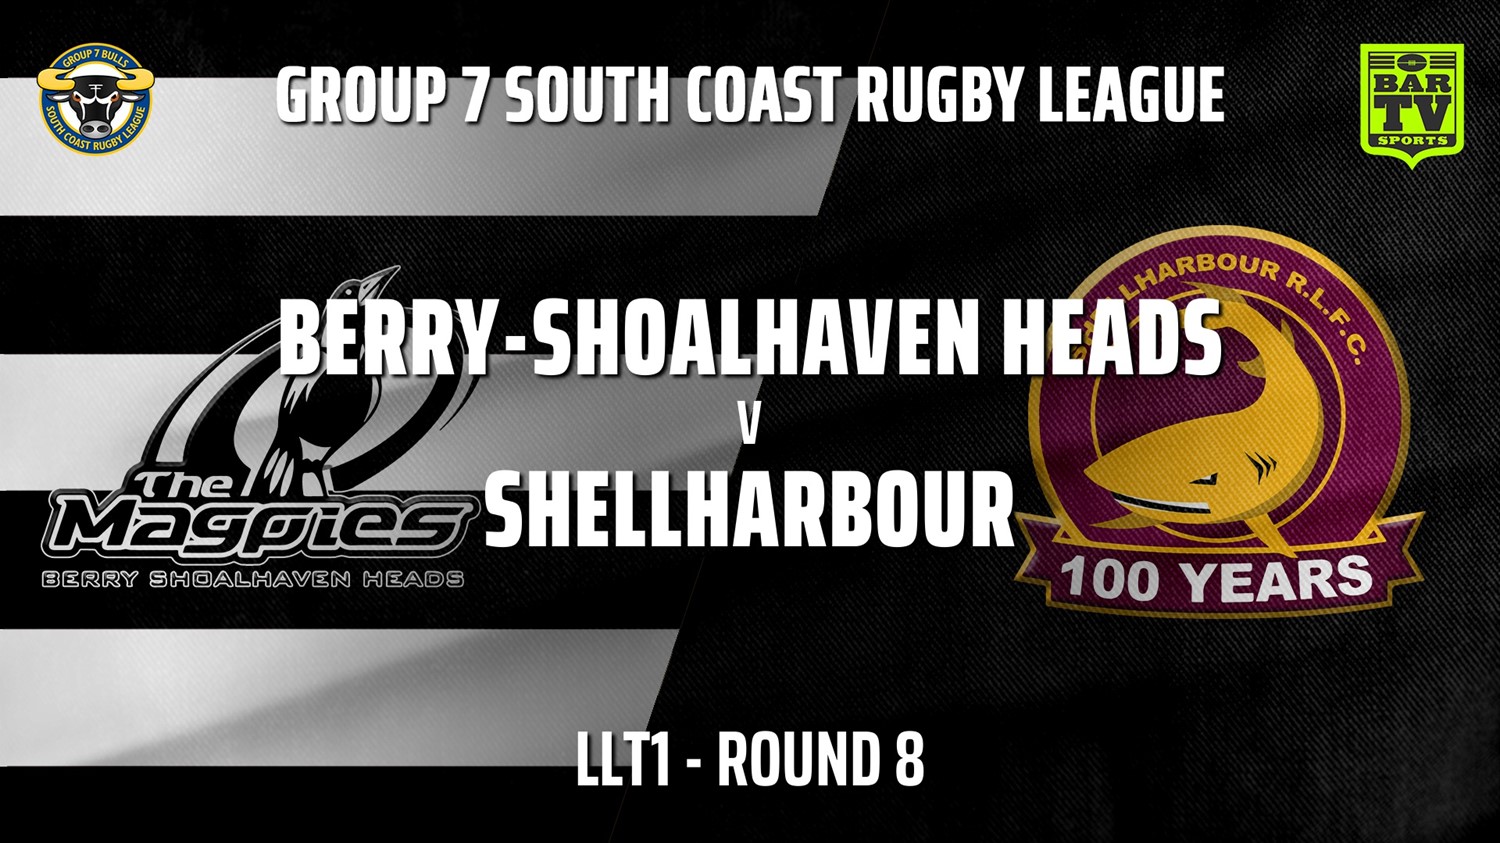 210605-Group 7 RL Round 8 - LLT1 - Berry-Shoalhaven Heads v Shellharbour Sharks Slate Image